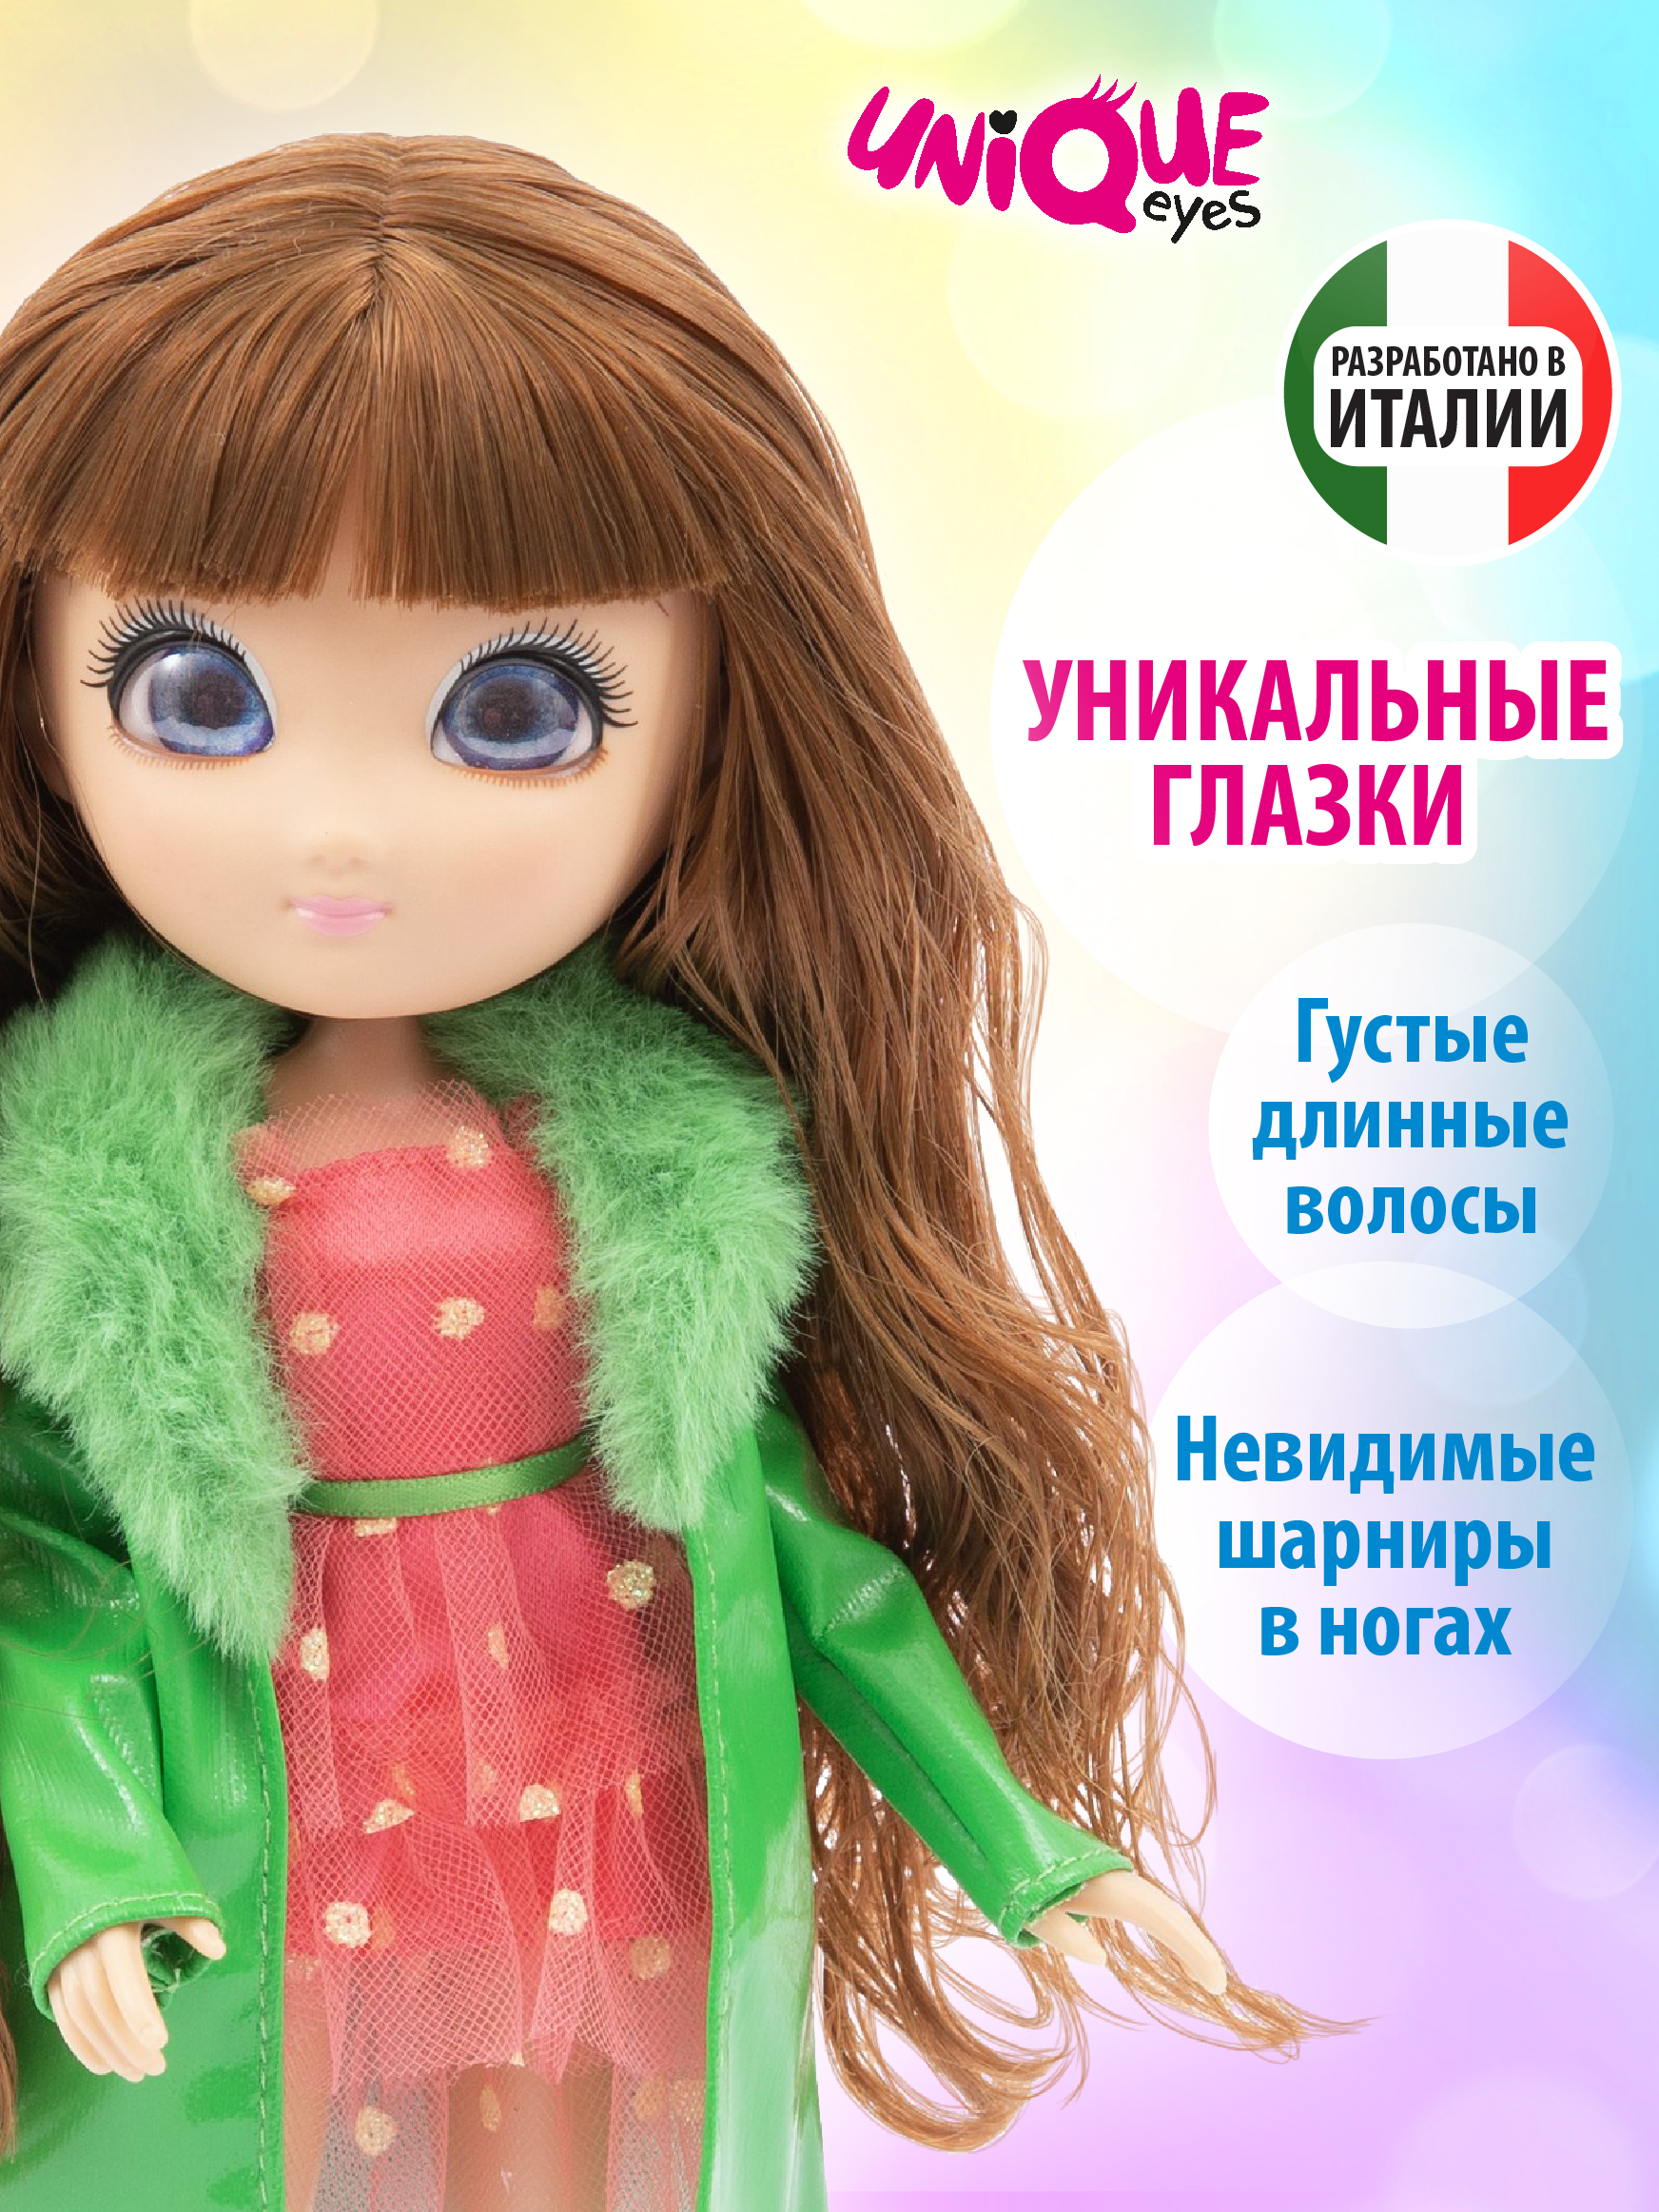 Кукла UNIQUE EYES София, серия фэшн, 25 см MYM39100